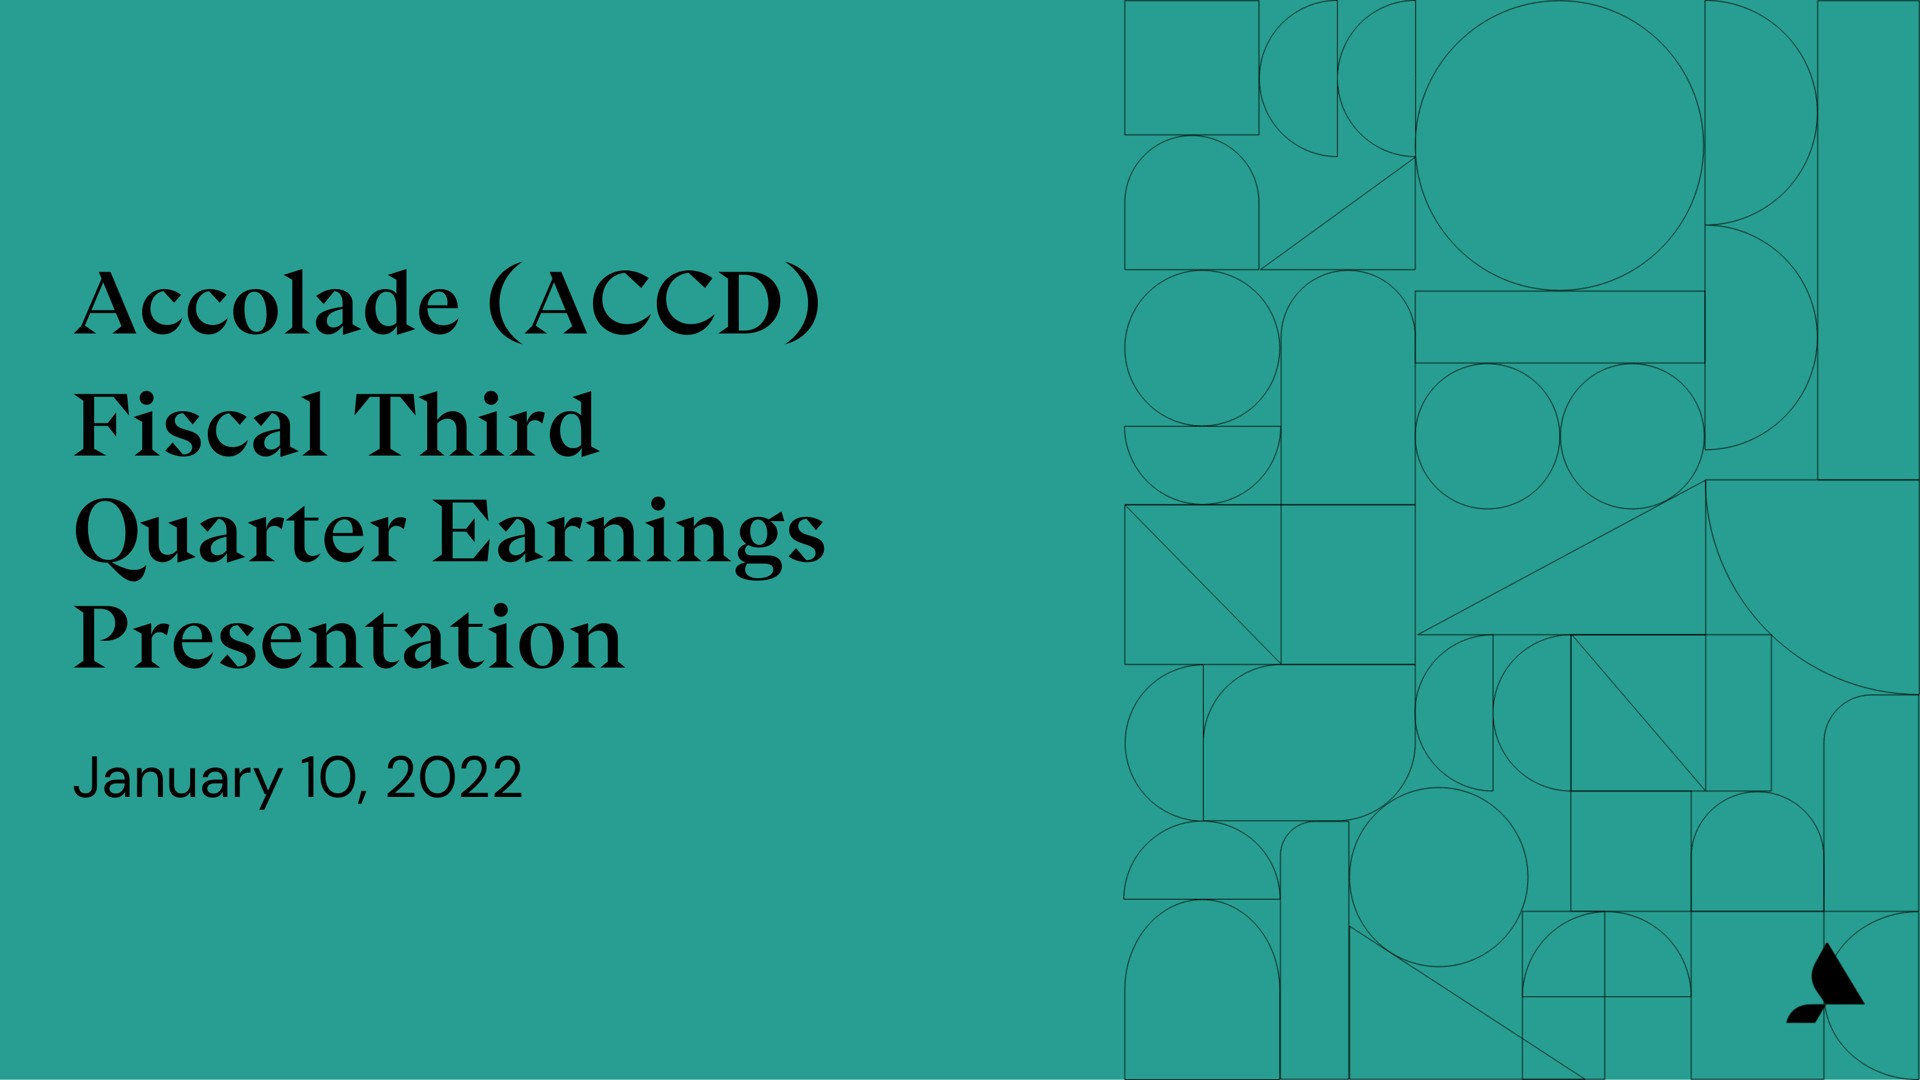 accolade fiscal third quarter earnings presentation | Accolade